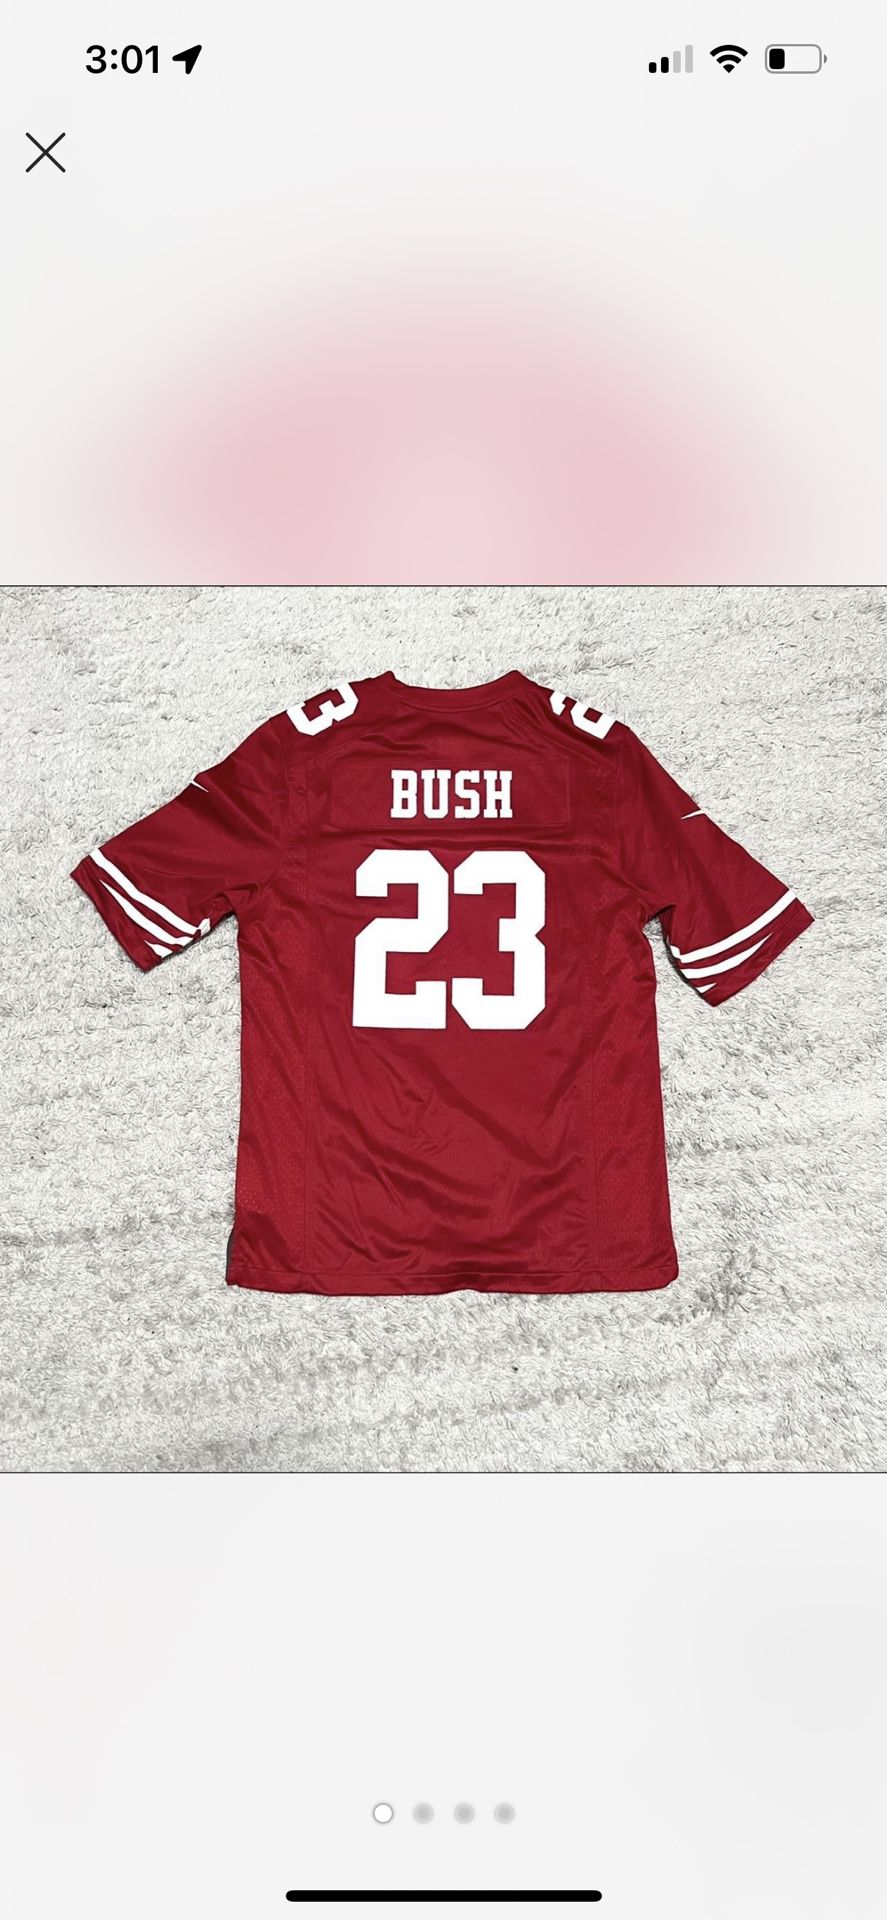 Reggie Bush 49ers Jersey Men’s Medium Nike